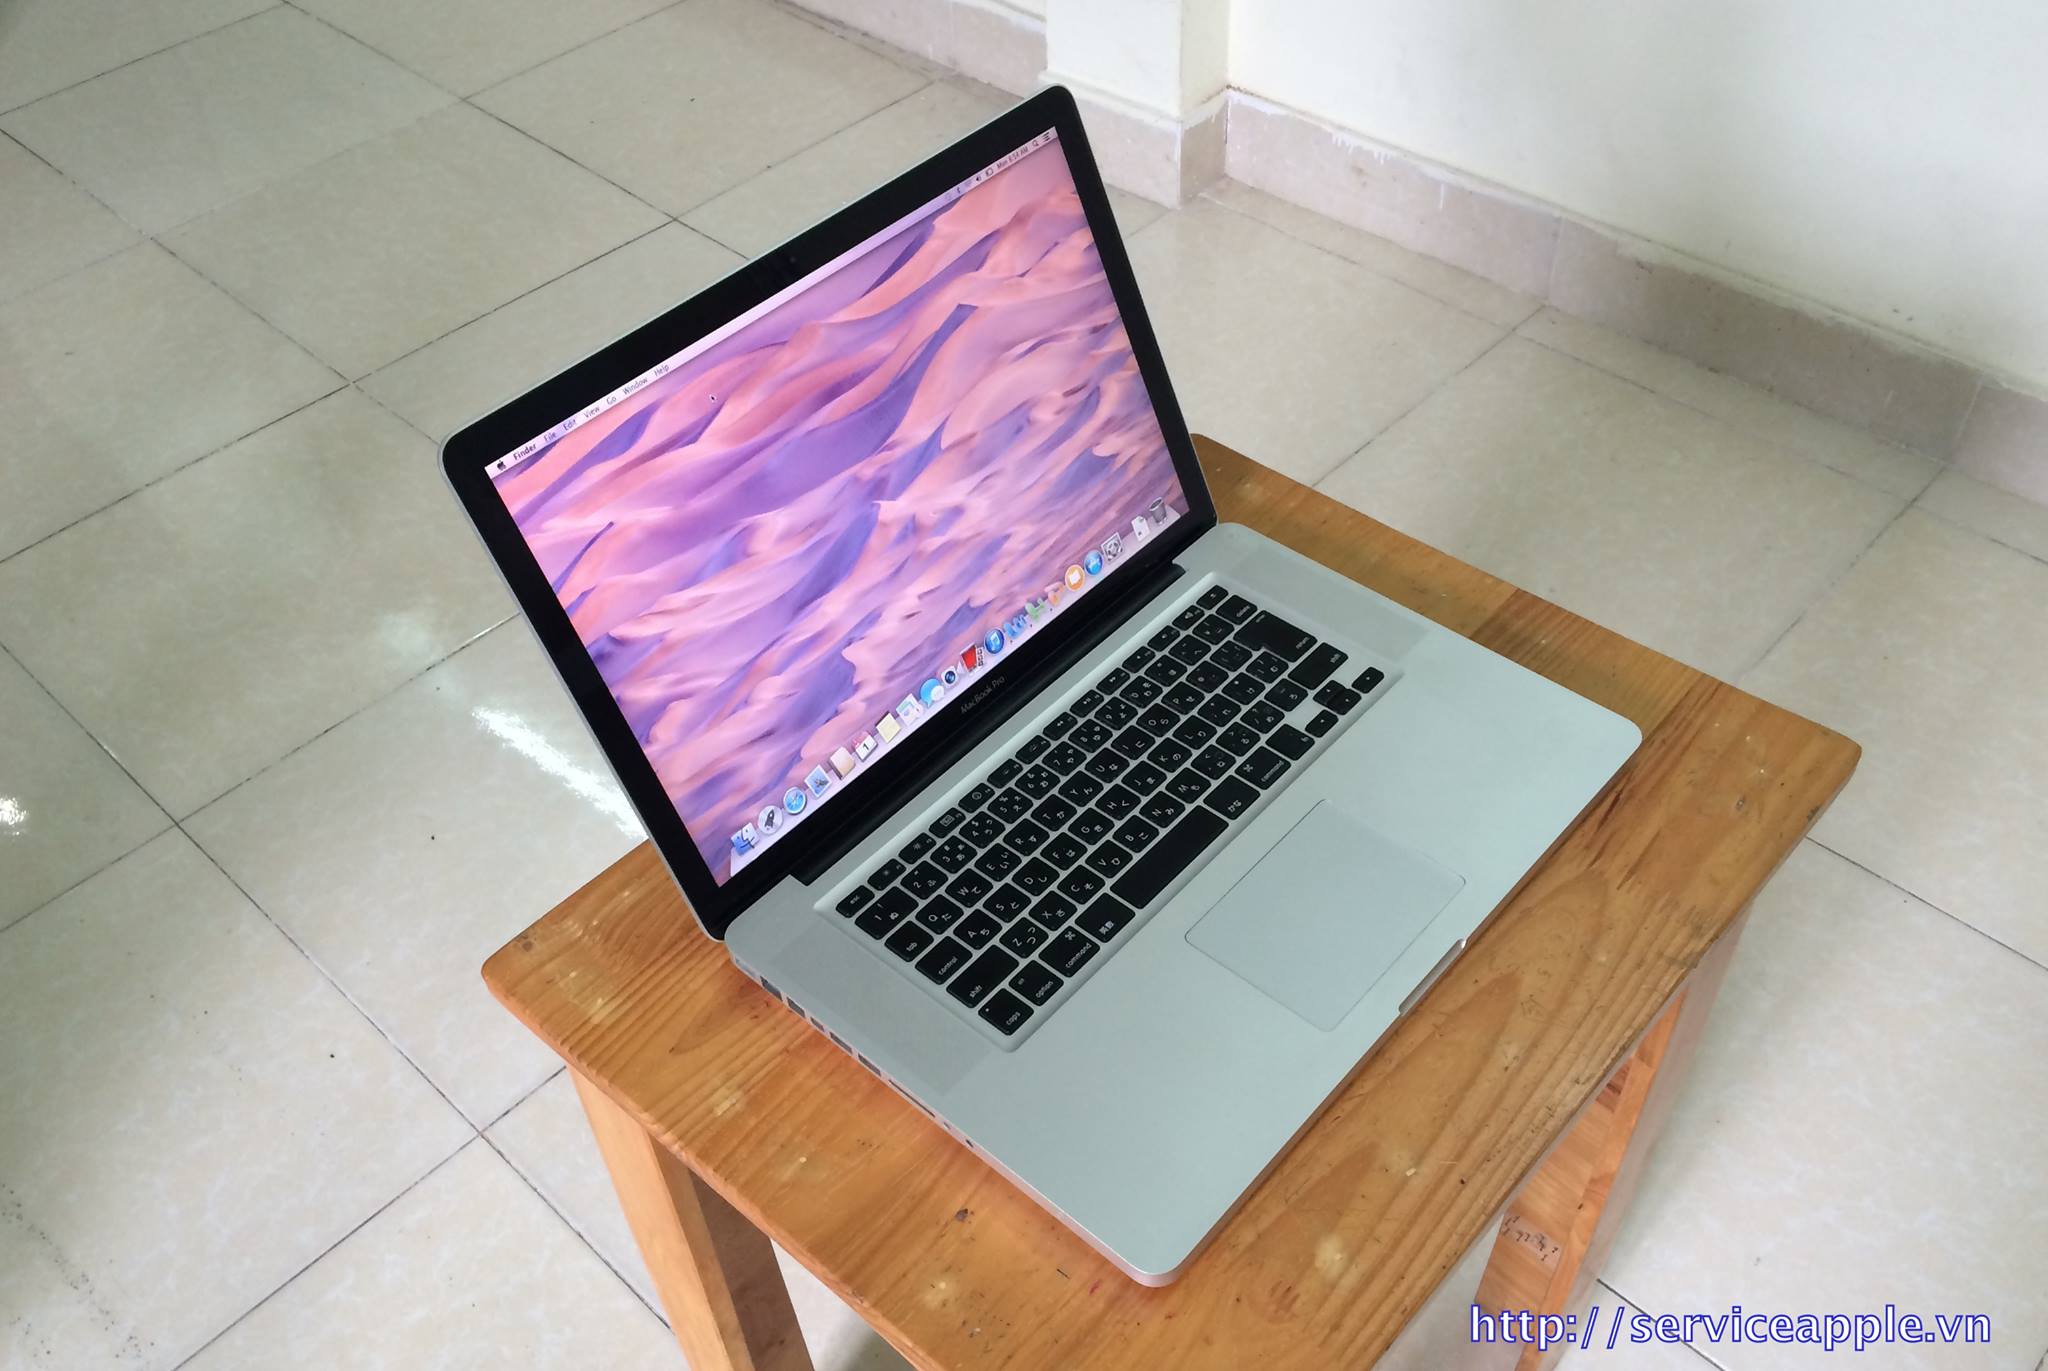 Macbook Pro A1286 MC373 Full Option 